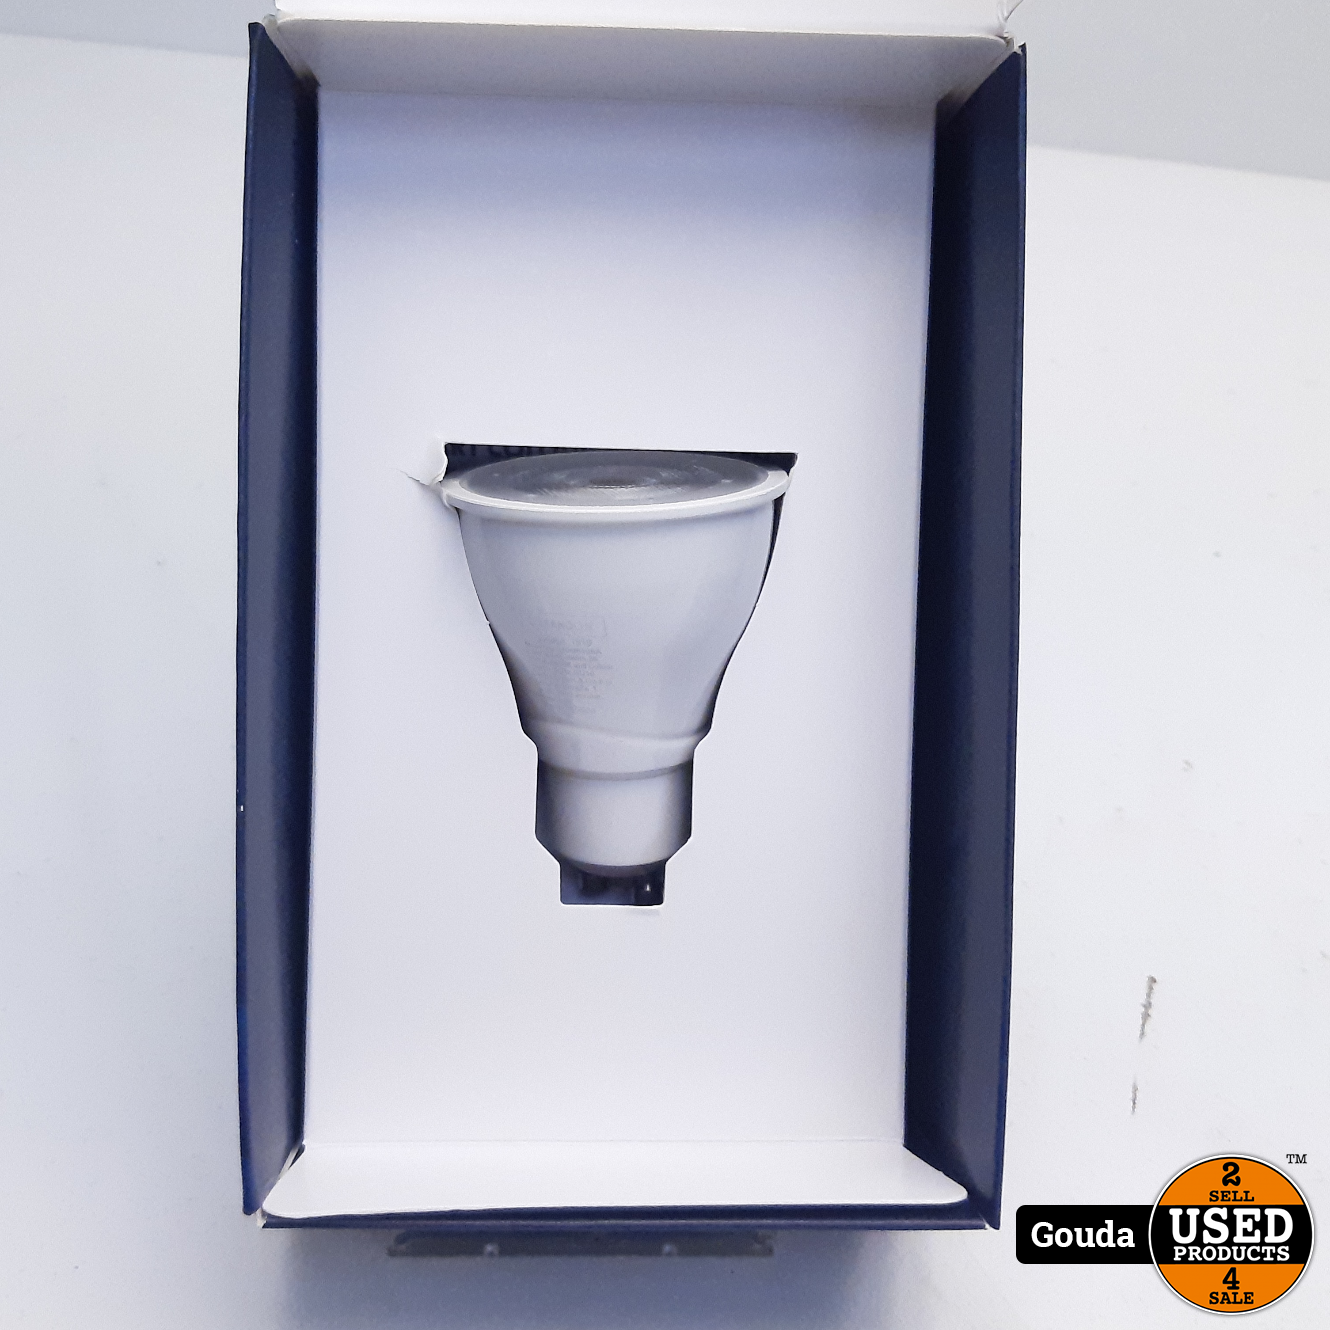 base Deform mortgage Lidl smart home lamp GU10 Nieuw - Used Products Gouda